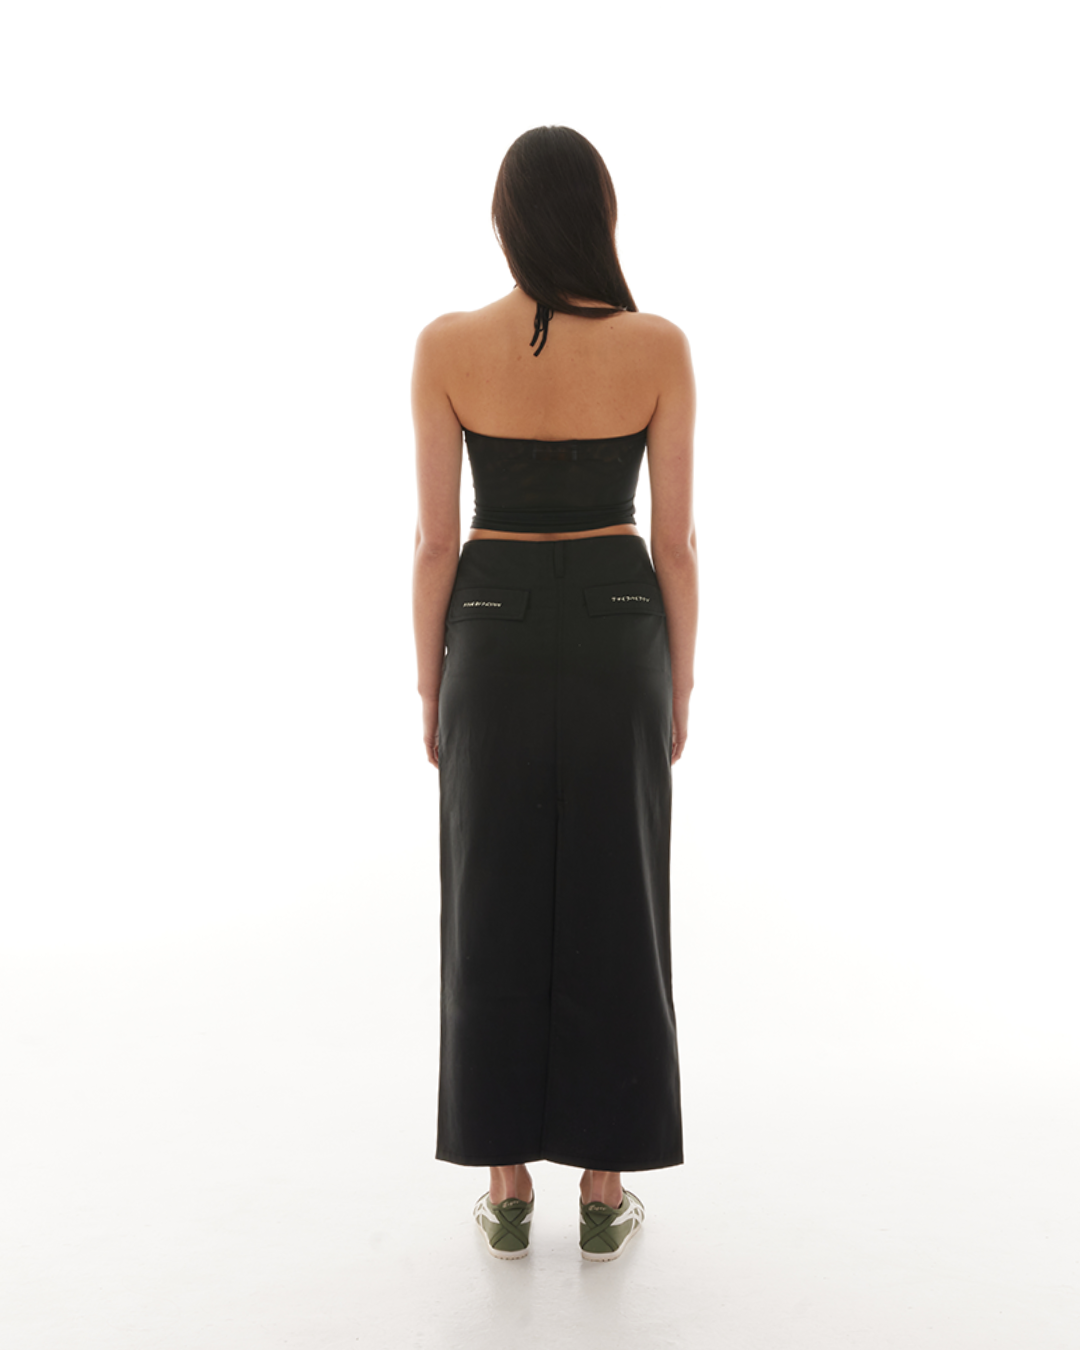 Womens Tencel Maxi Skirt - Black